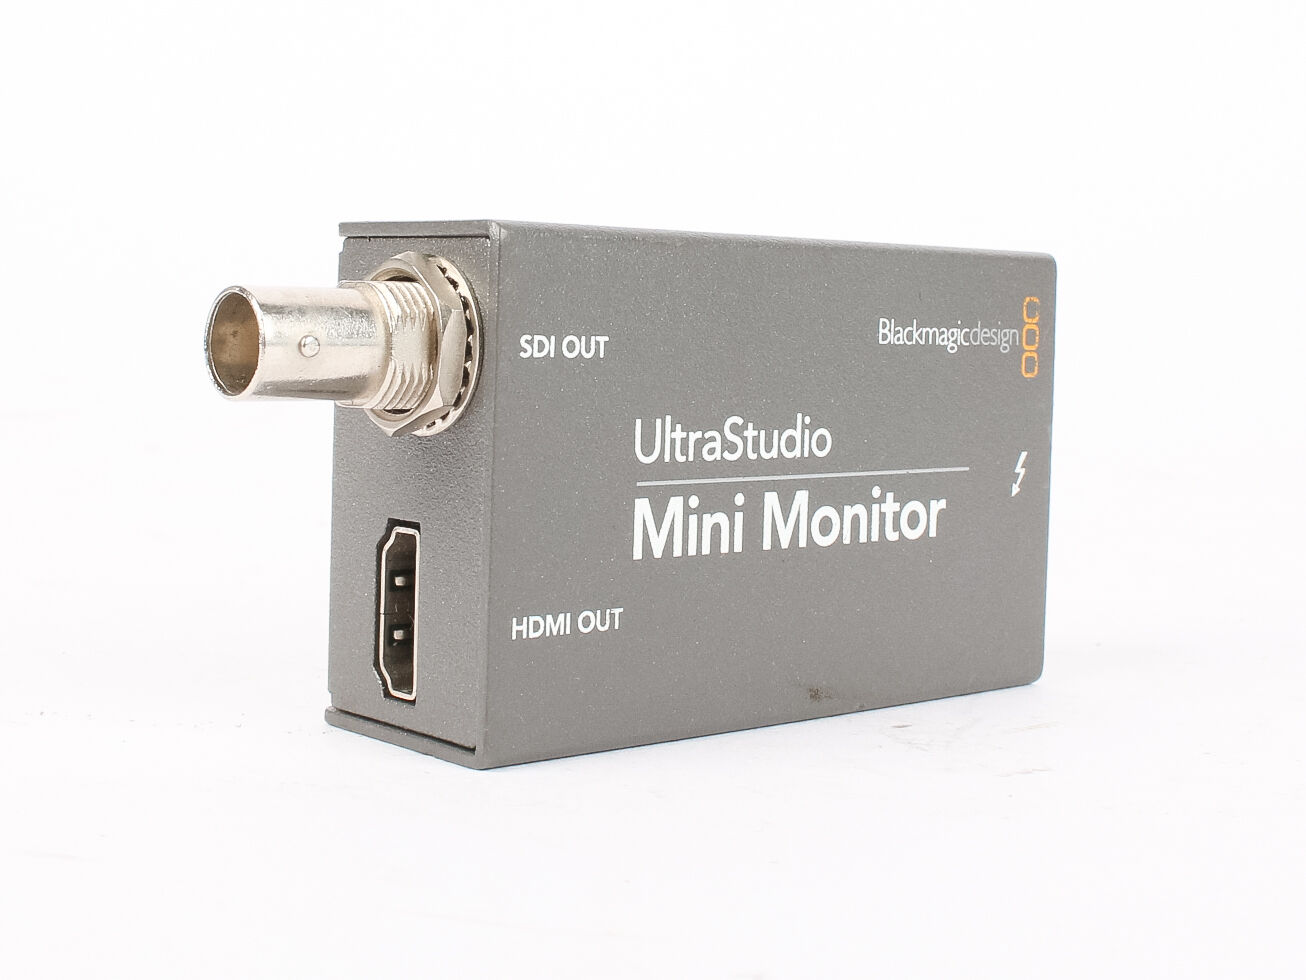 Used Blackmagic Design UltraStudio Mini Monitor